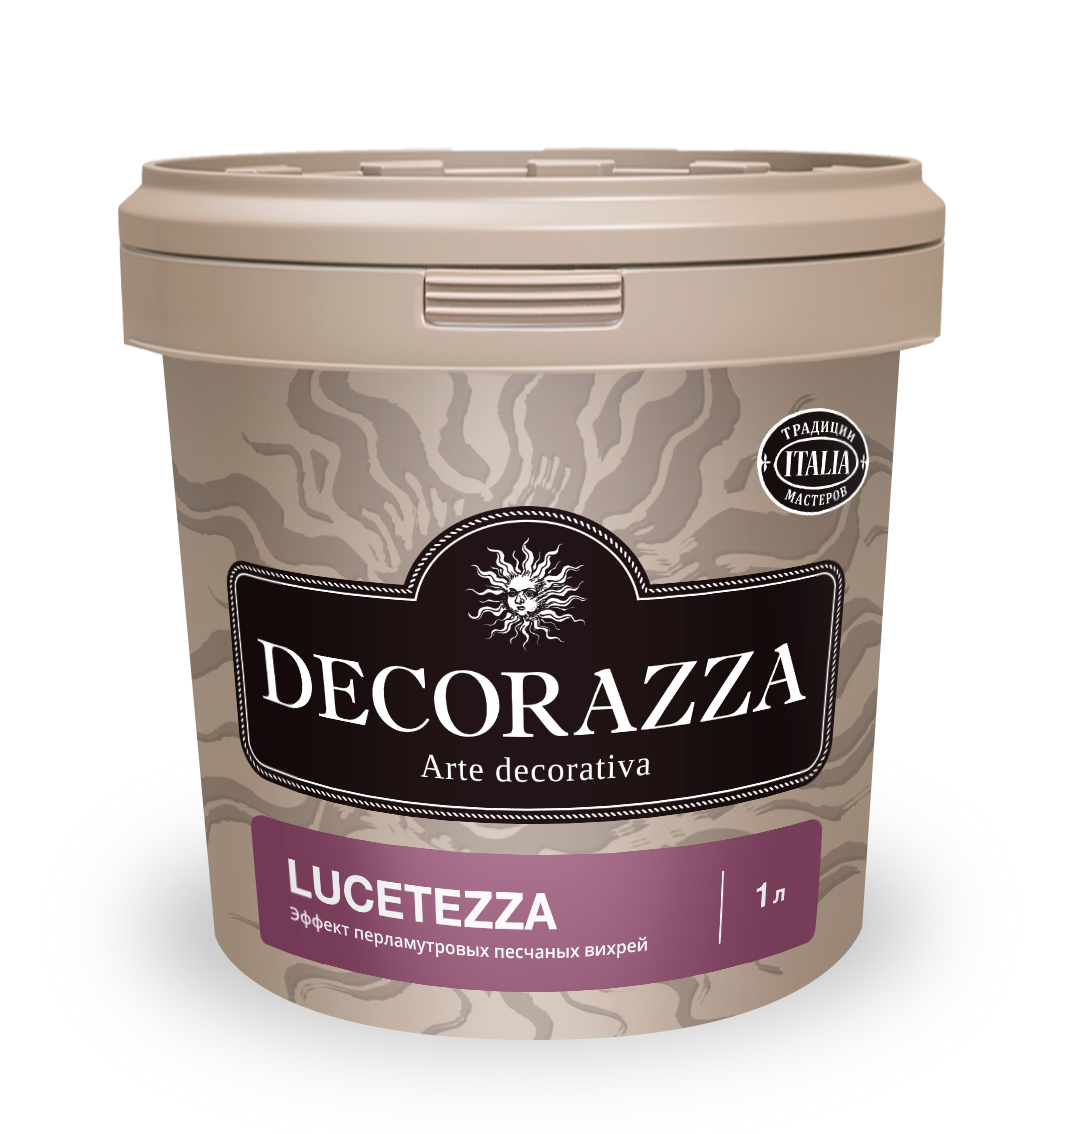 Декоративная штукатурка Decorazza Lucetezza Alluminio LC 700, 1 л декоративная металлизированная краска decorazza